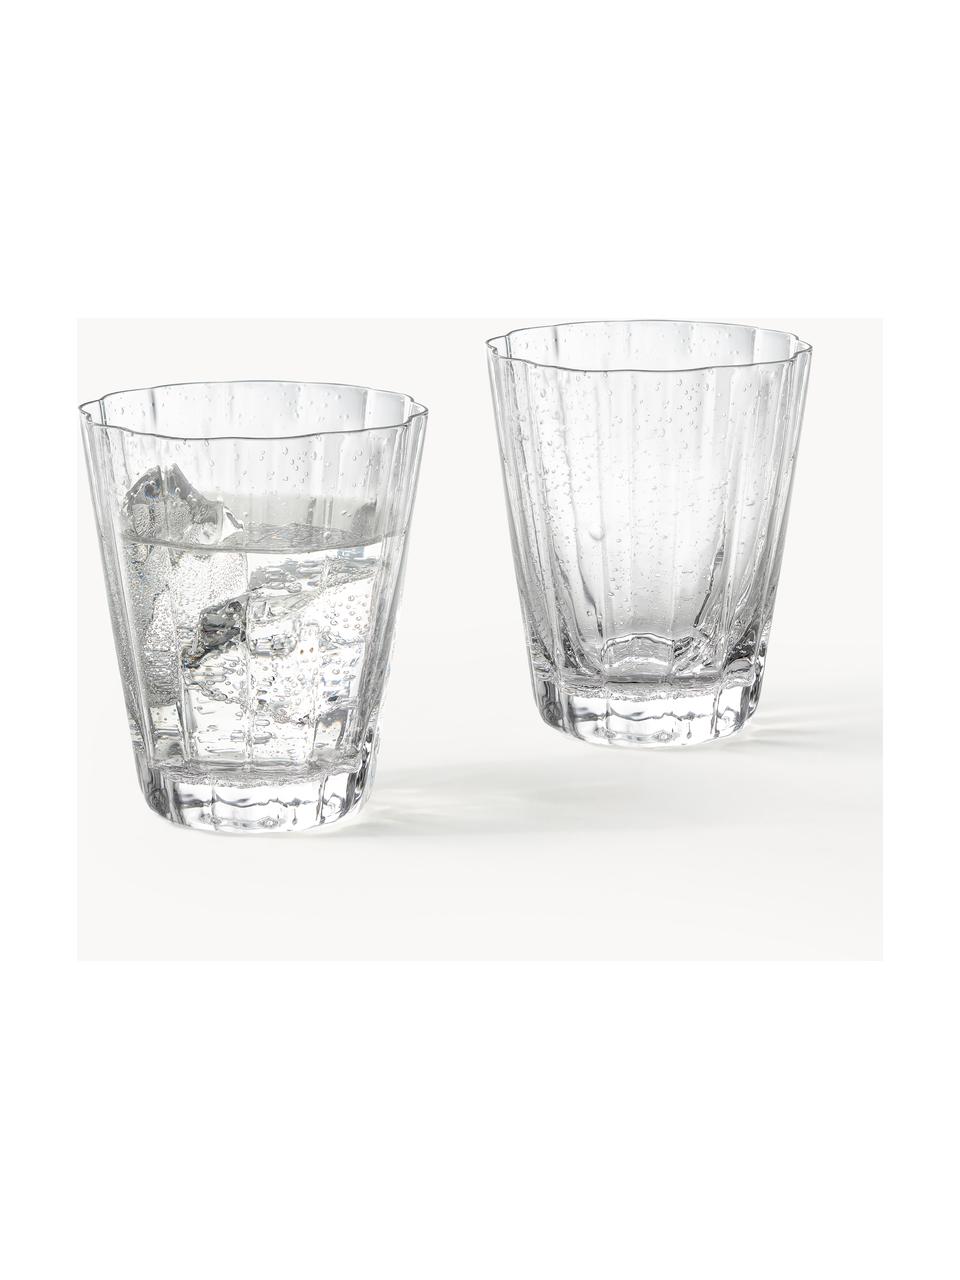 Mondgeblazen waterglazen Scallop Glasses met groefstructuur, 4 stuks, Mondgeblazen glas, Transparant, Ø 8 x H 10 cm, 230 ml